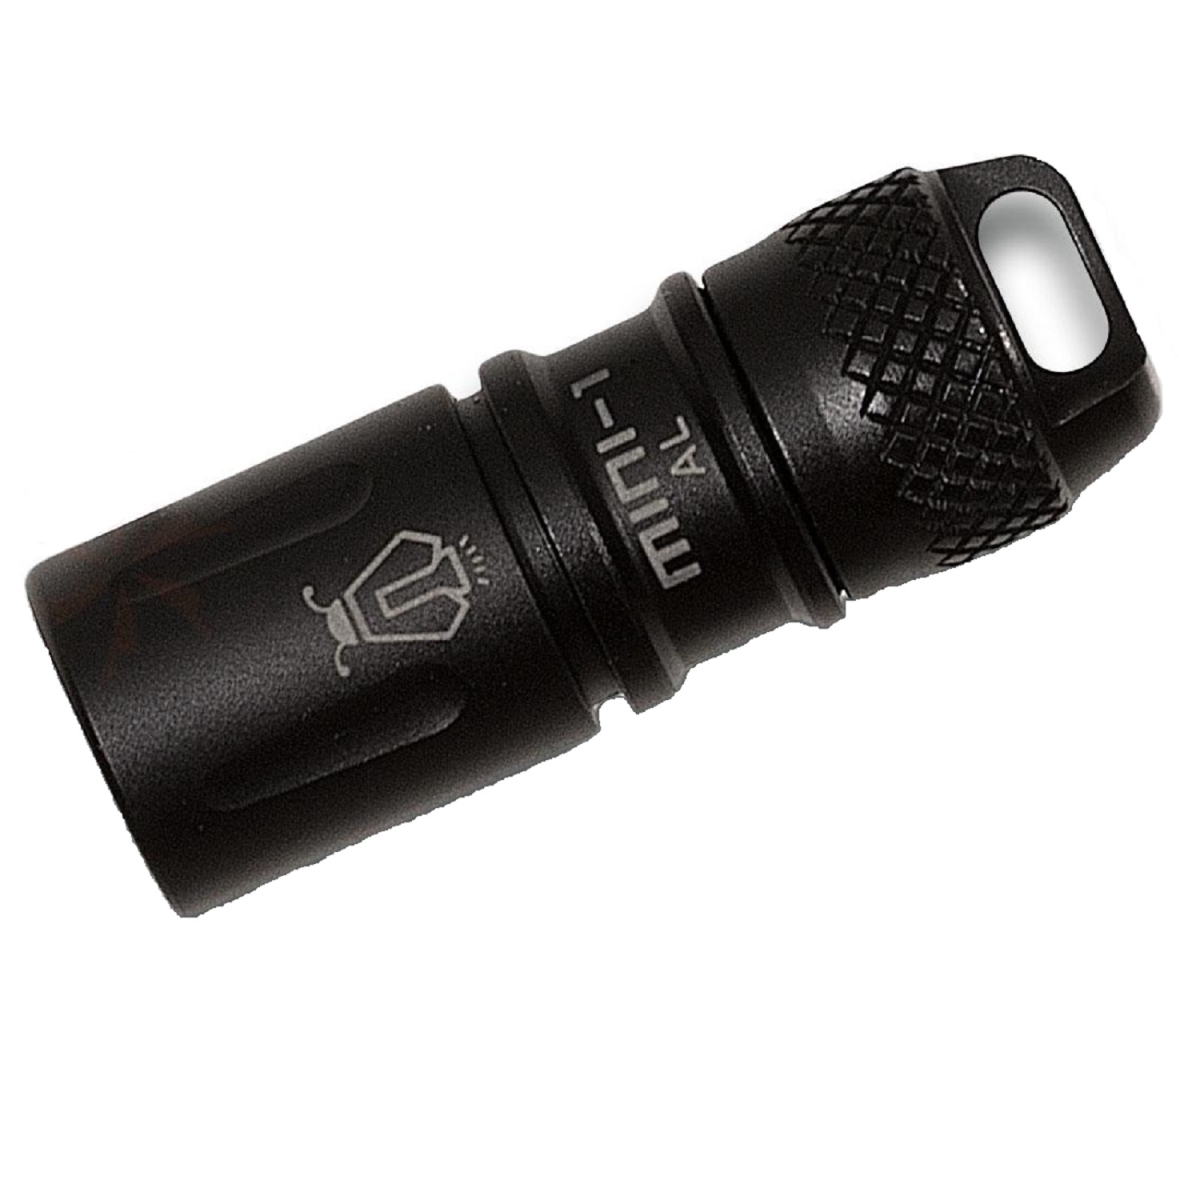 9005655 Mini-al Keychain Flashlight, Black Aluminum